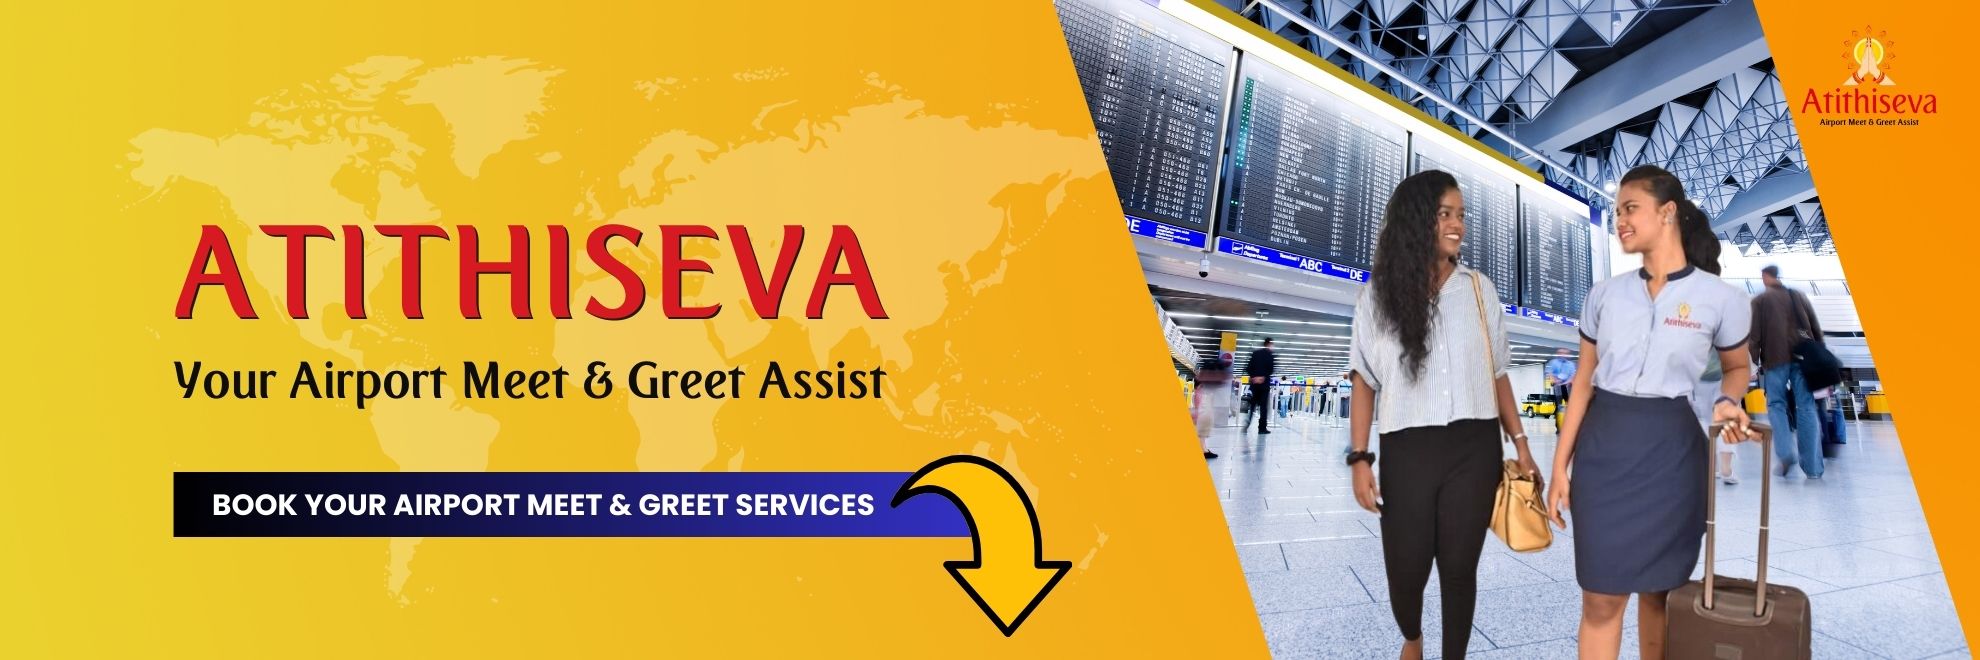 Atithiseva - Airport Meet and Greet Services